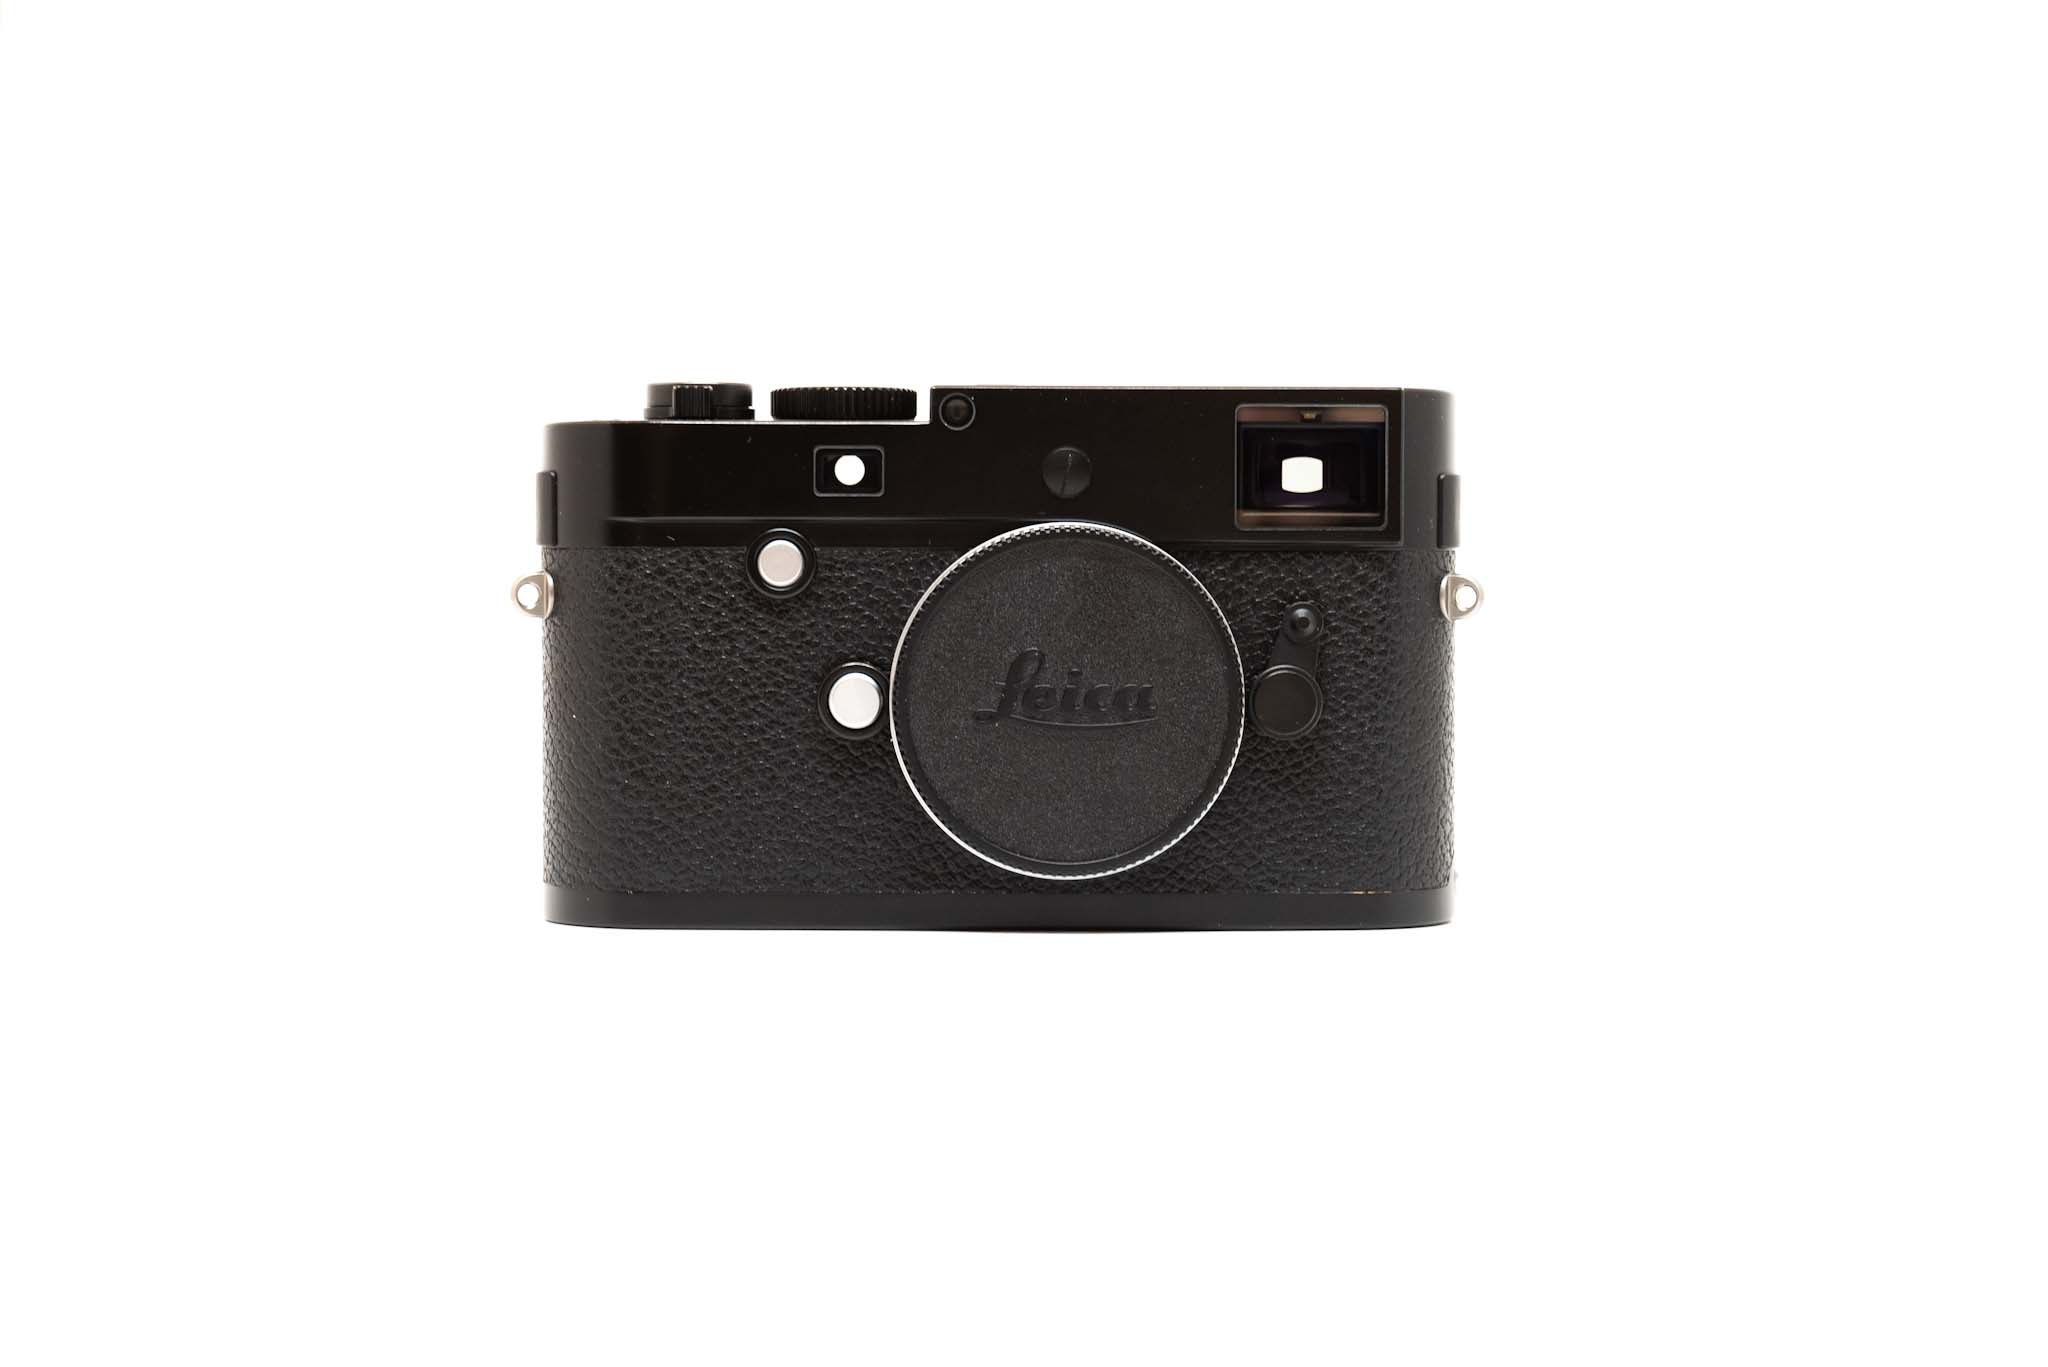 Leica M-P Typ 240 Black